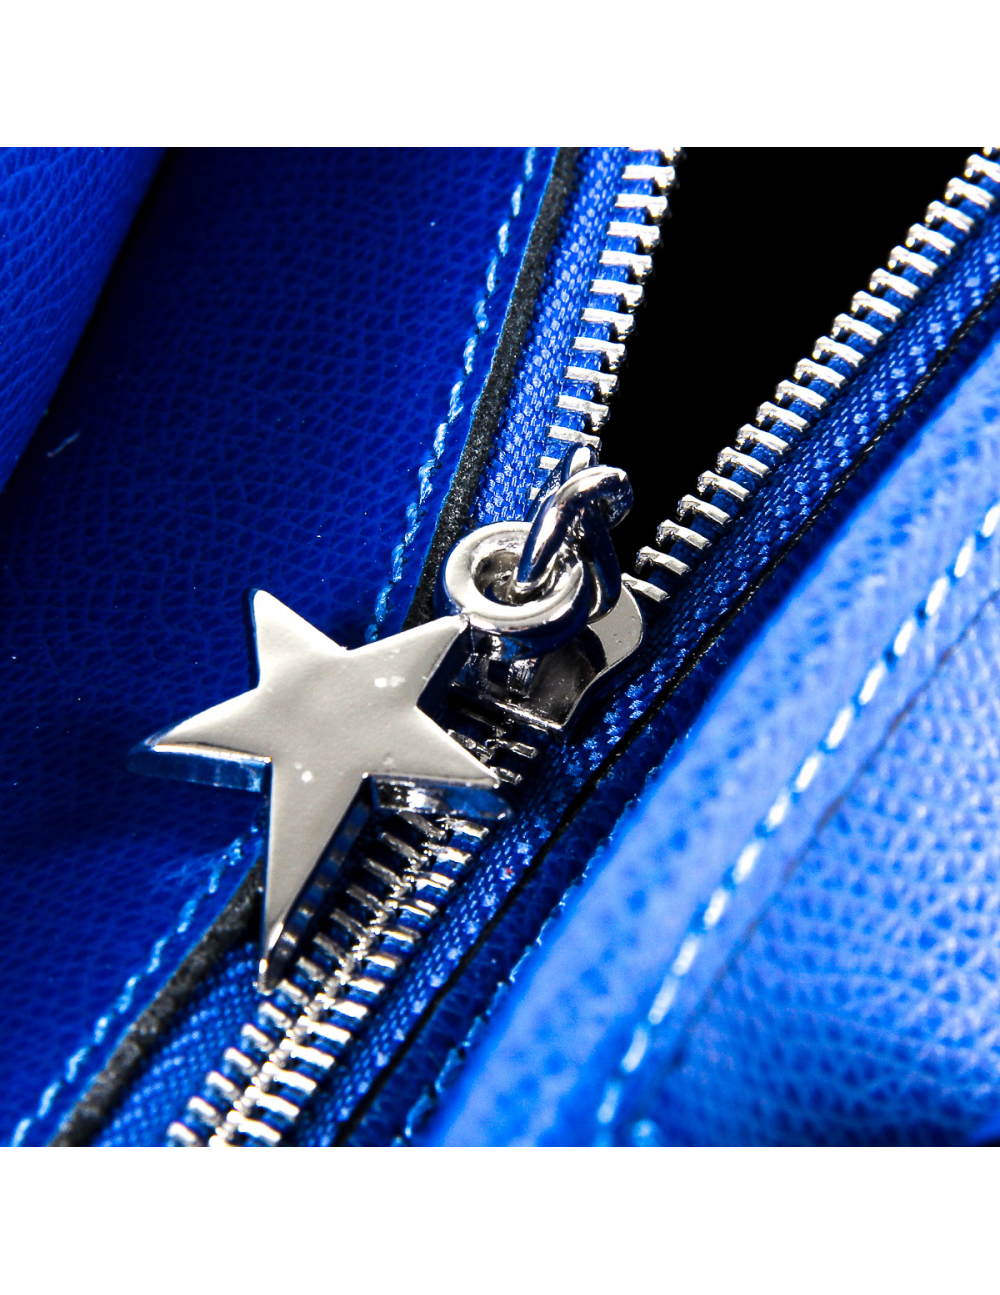 Andrew Charles Womens Handbag Blue ETHEL - YuppyCollections